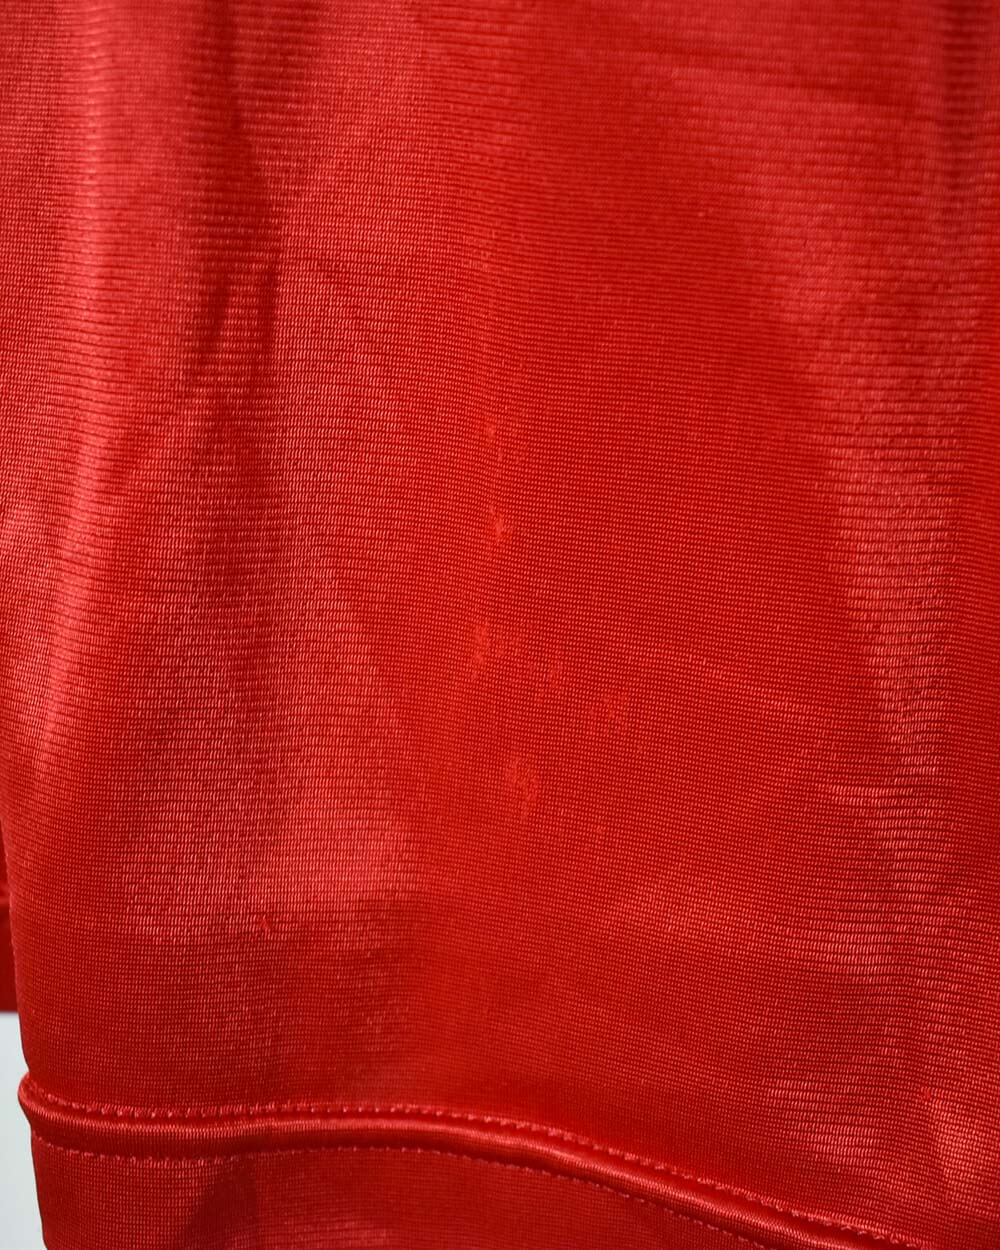 Red Adidas Equipment Football Shirt - X-Large